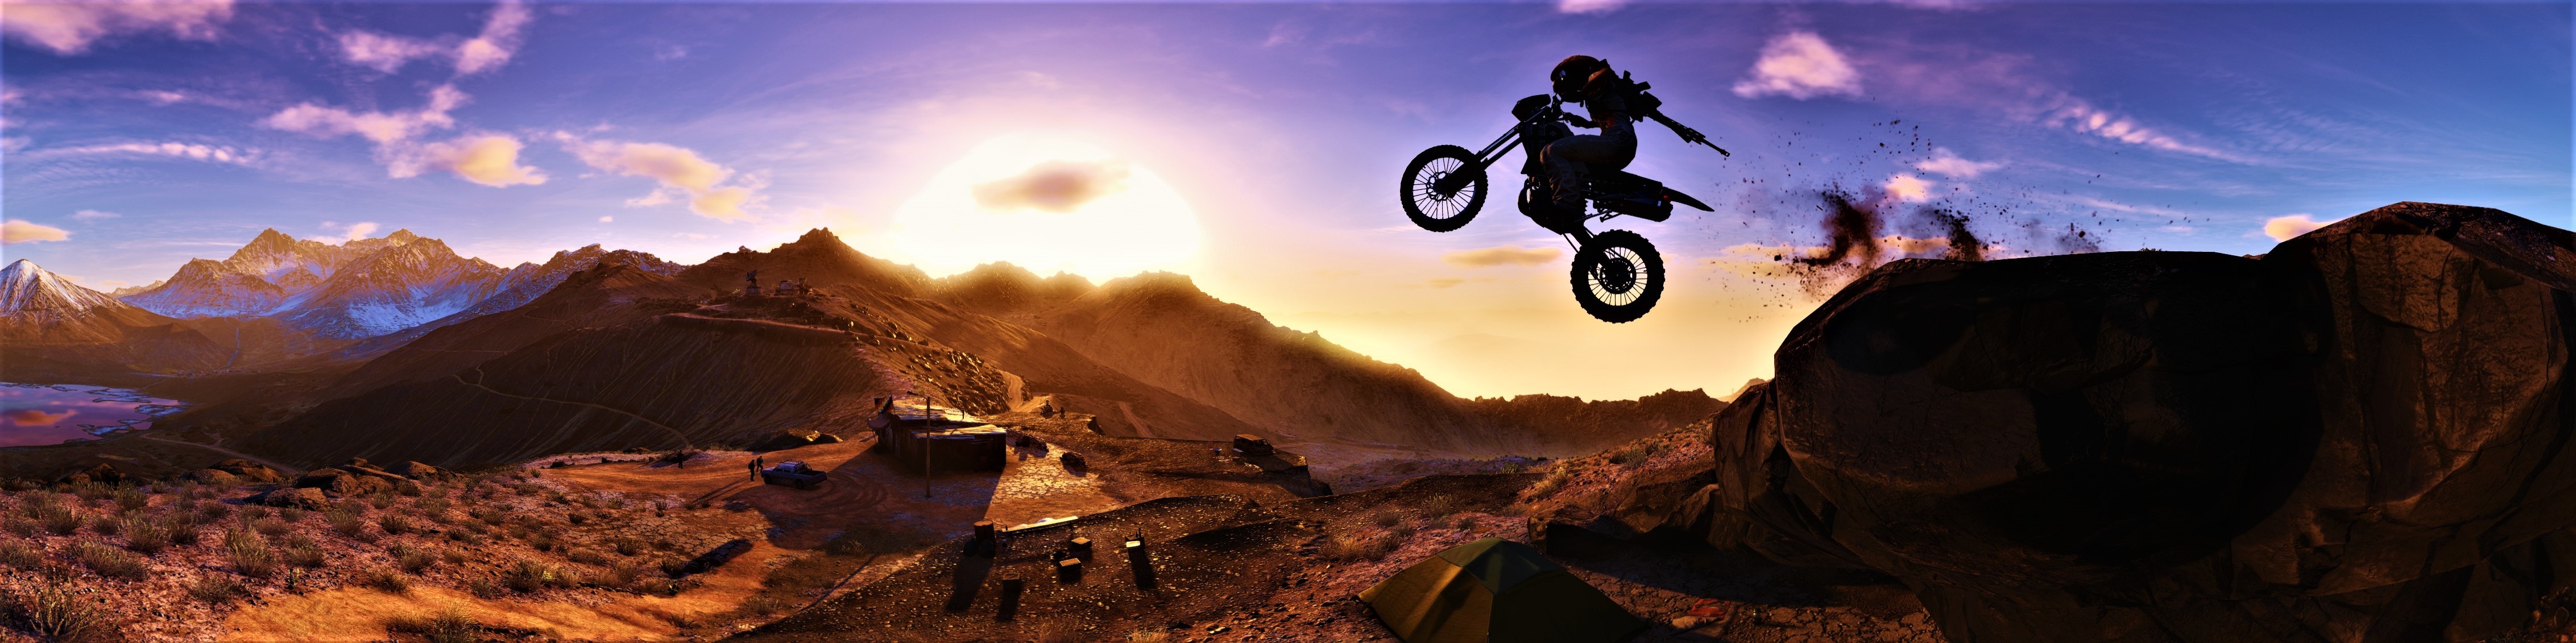 ghost recon wildlands wallpaper,freestyle motocross,motocross,extreme sport,stunt performer,vehicle